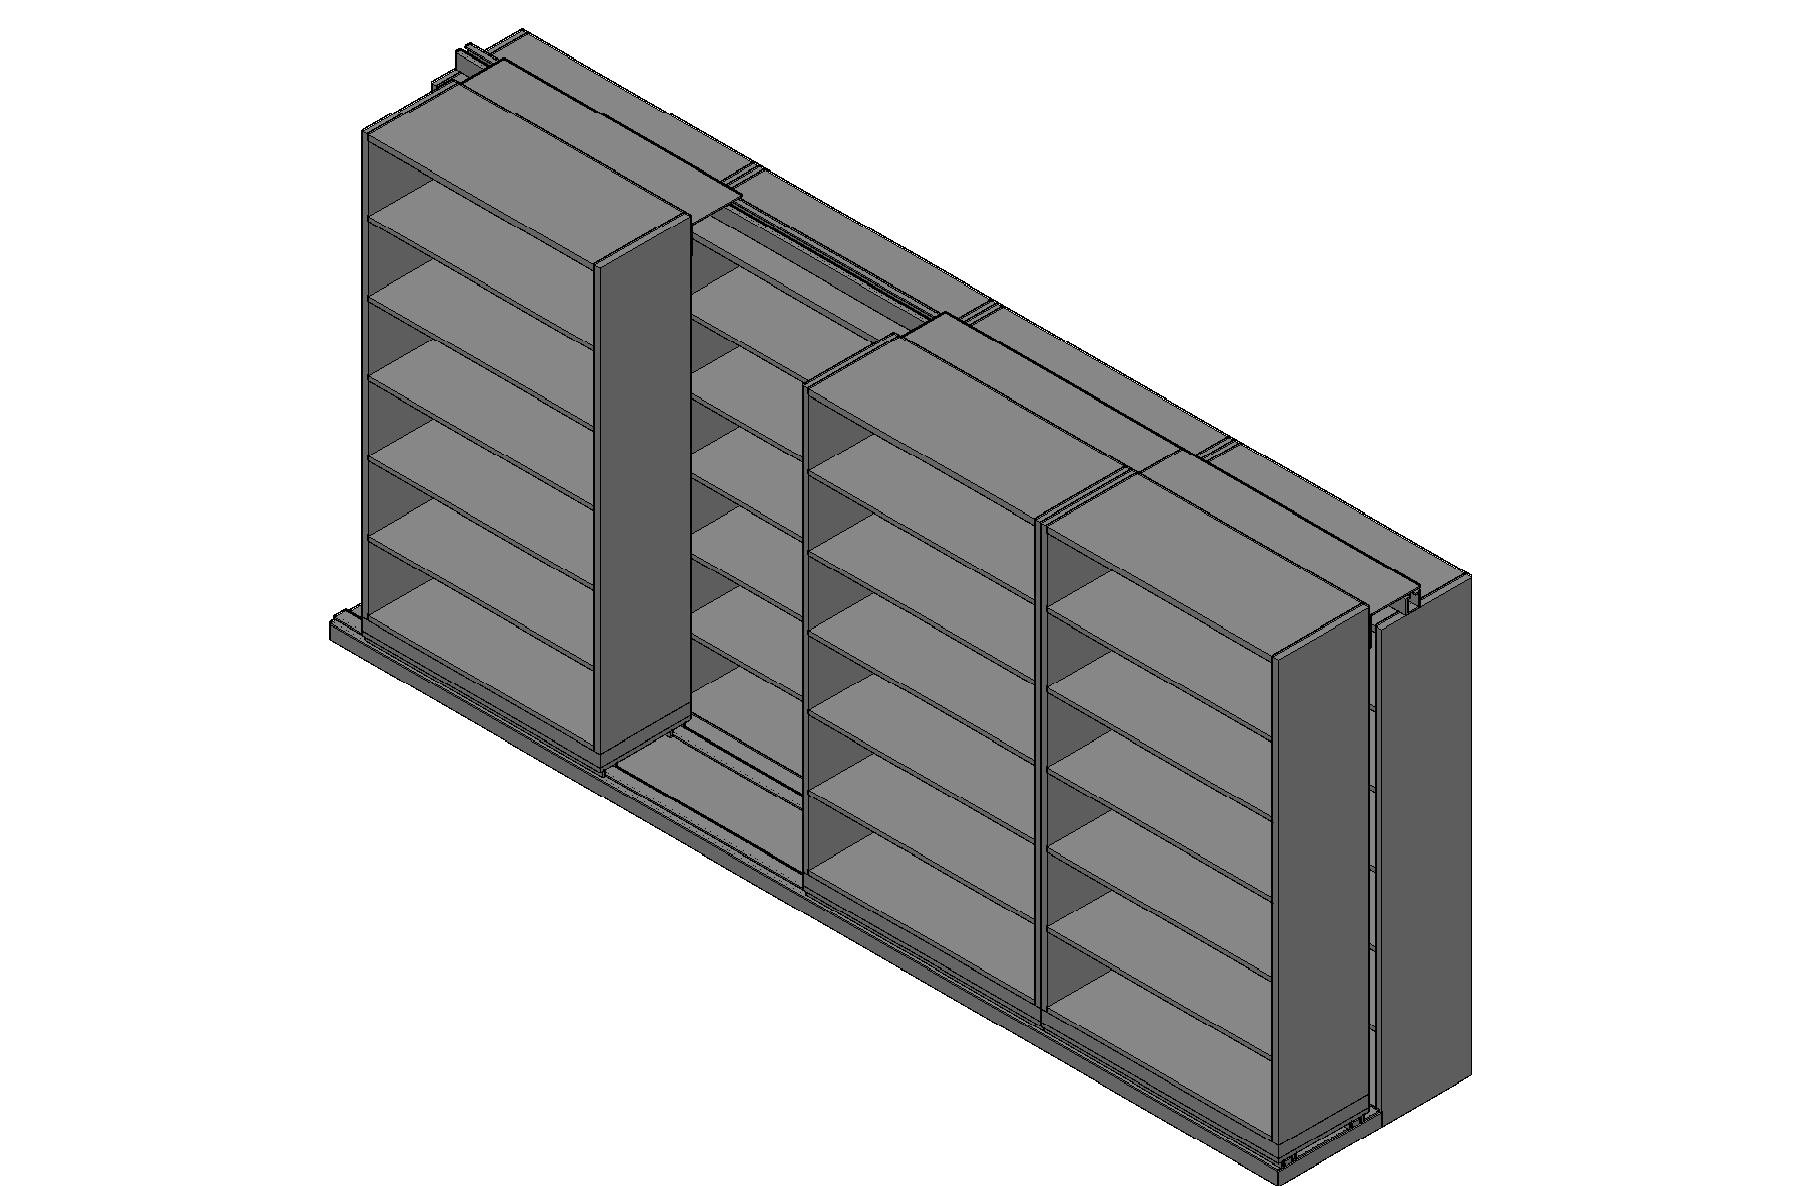 Box Size Sliding Shelves - 2 Rows Deep - 6 Levels - (42" x 16" Shelves) - 172" Total Width